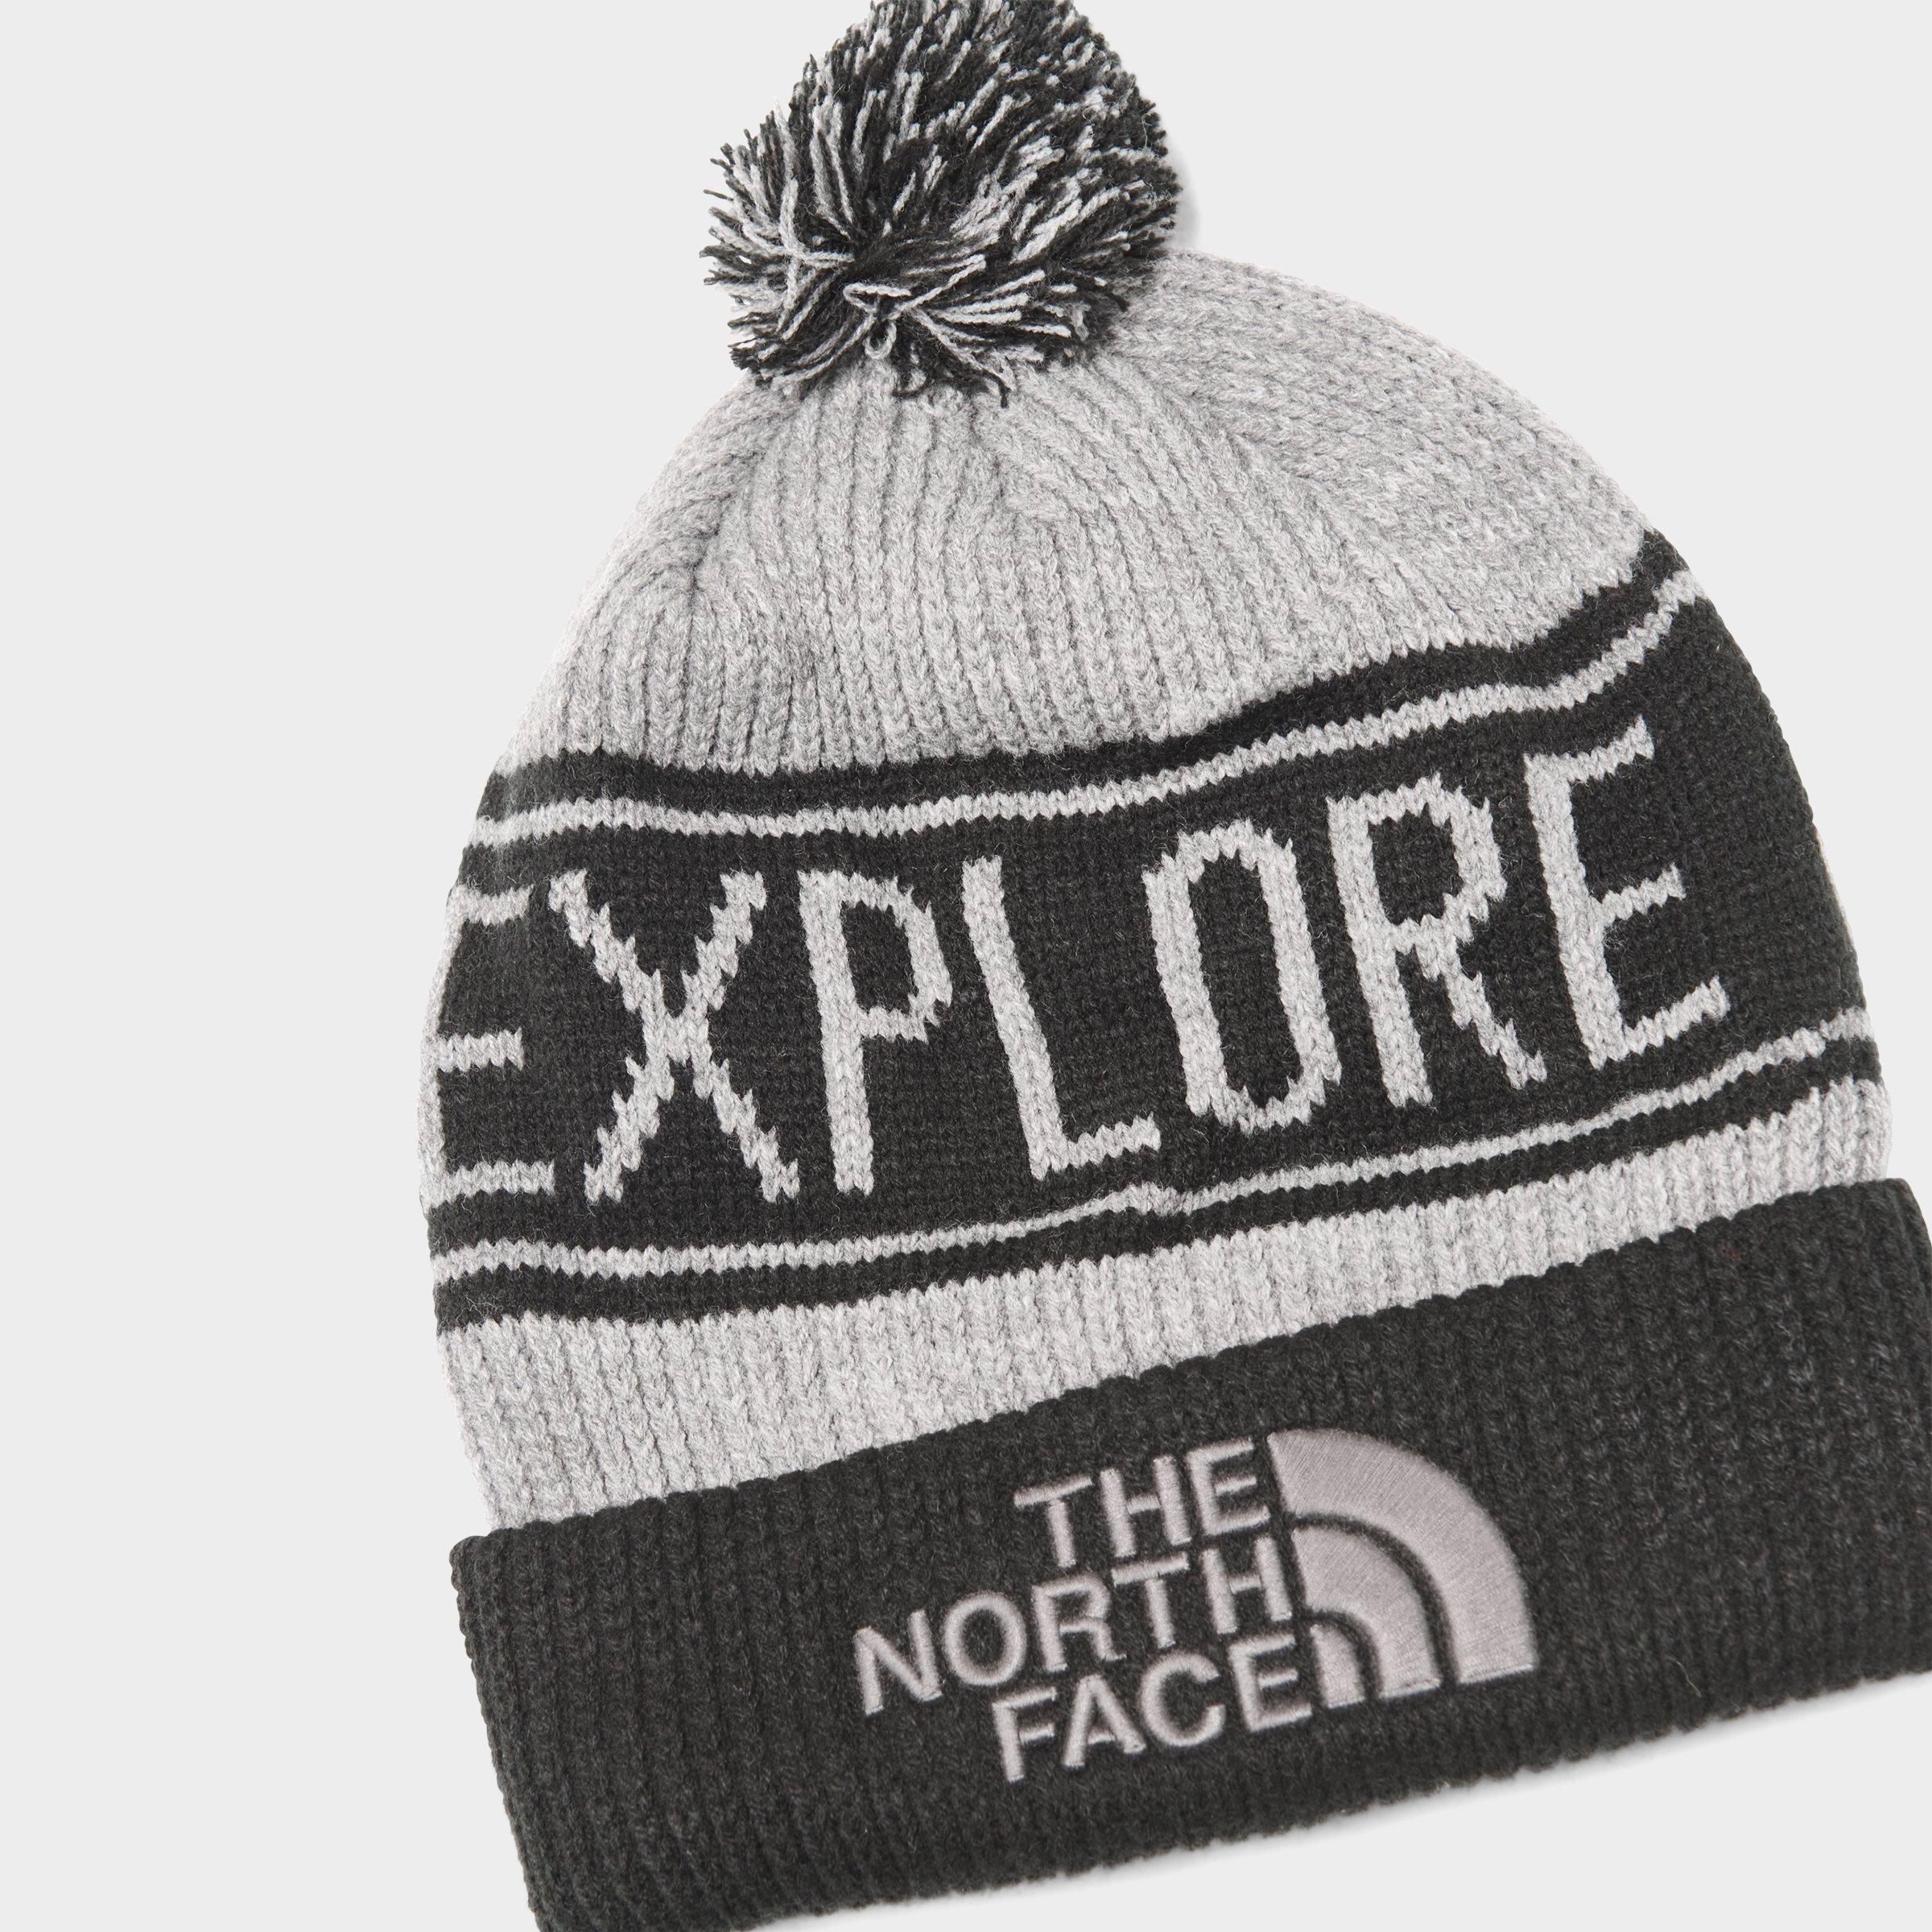 black north face beanie hat